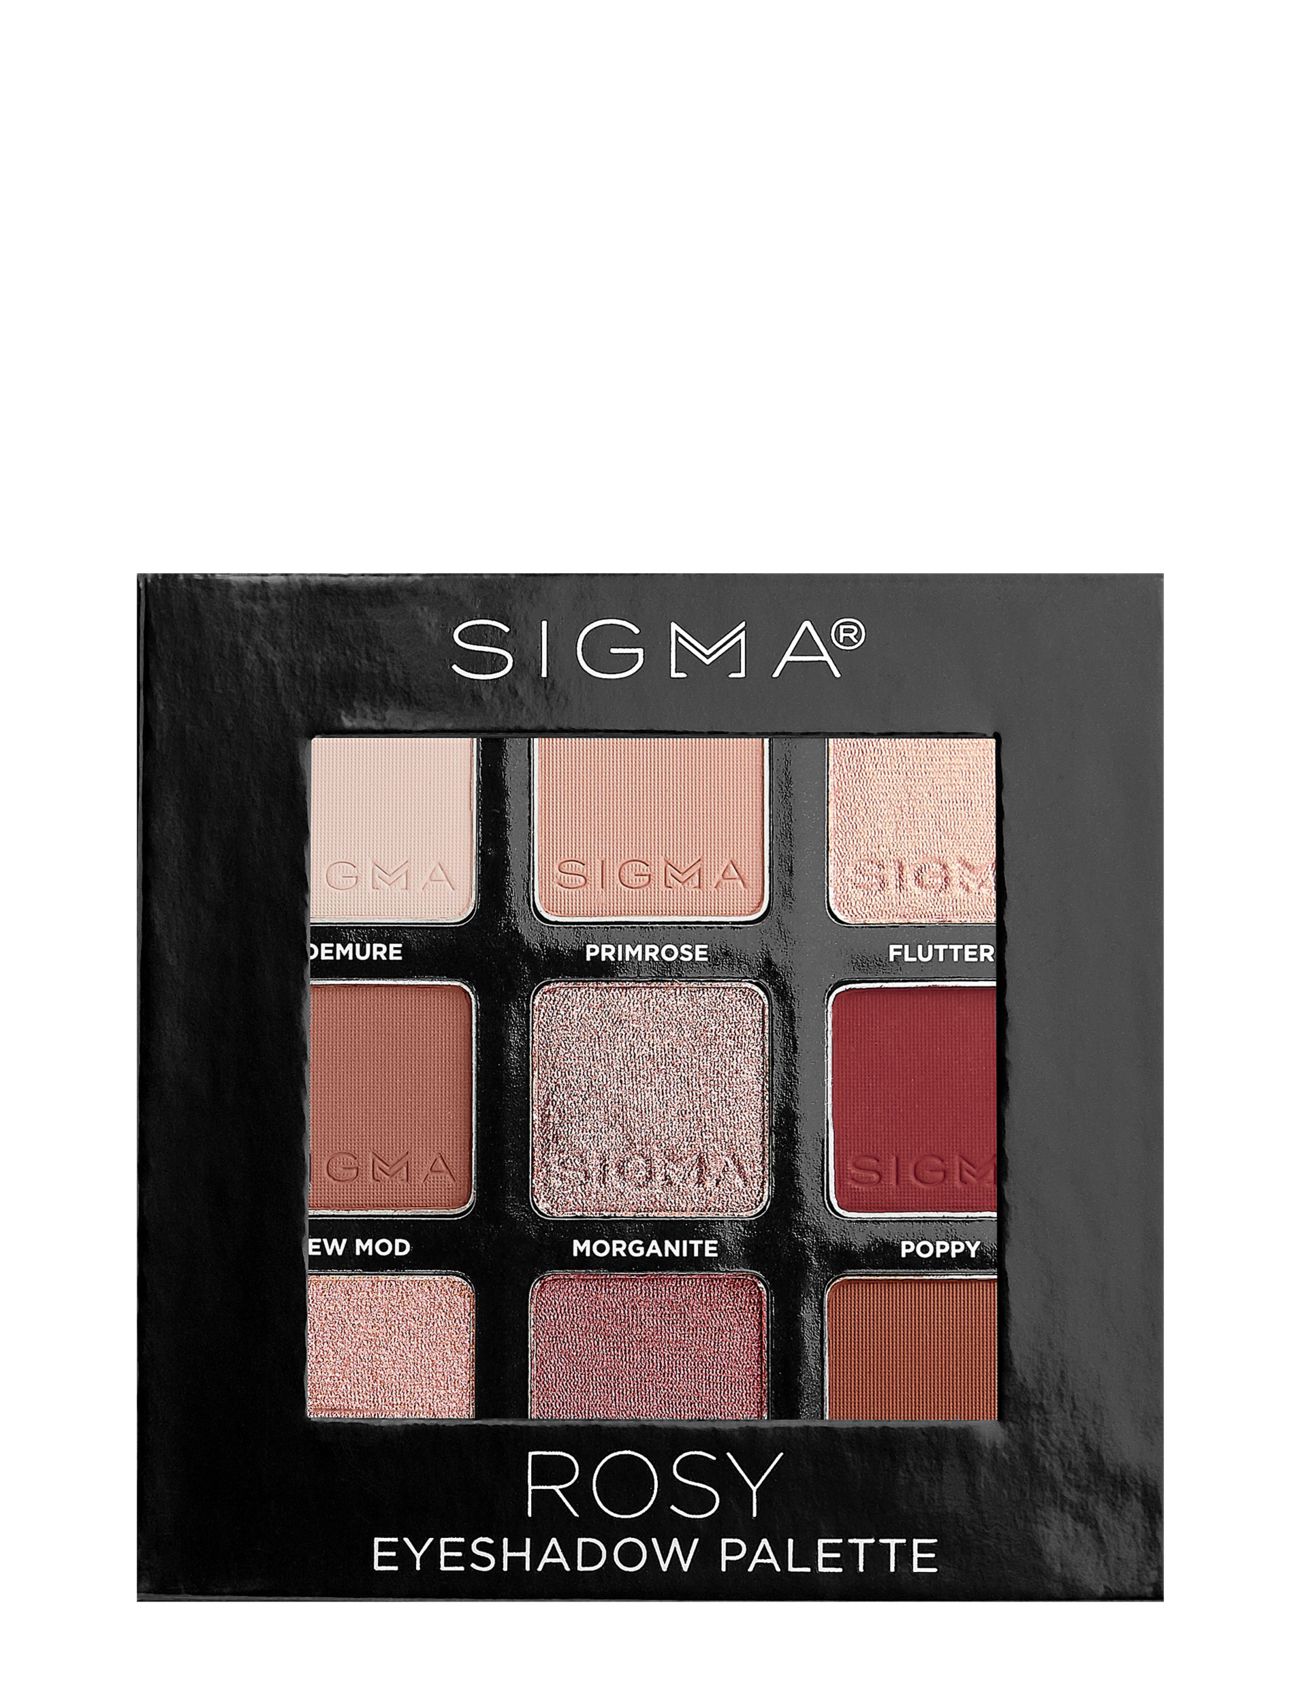 Rosy Eyeshadow Palette Ögonskugga Palette Smink Multi/patterned SIGMA Beauty